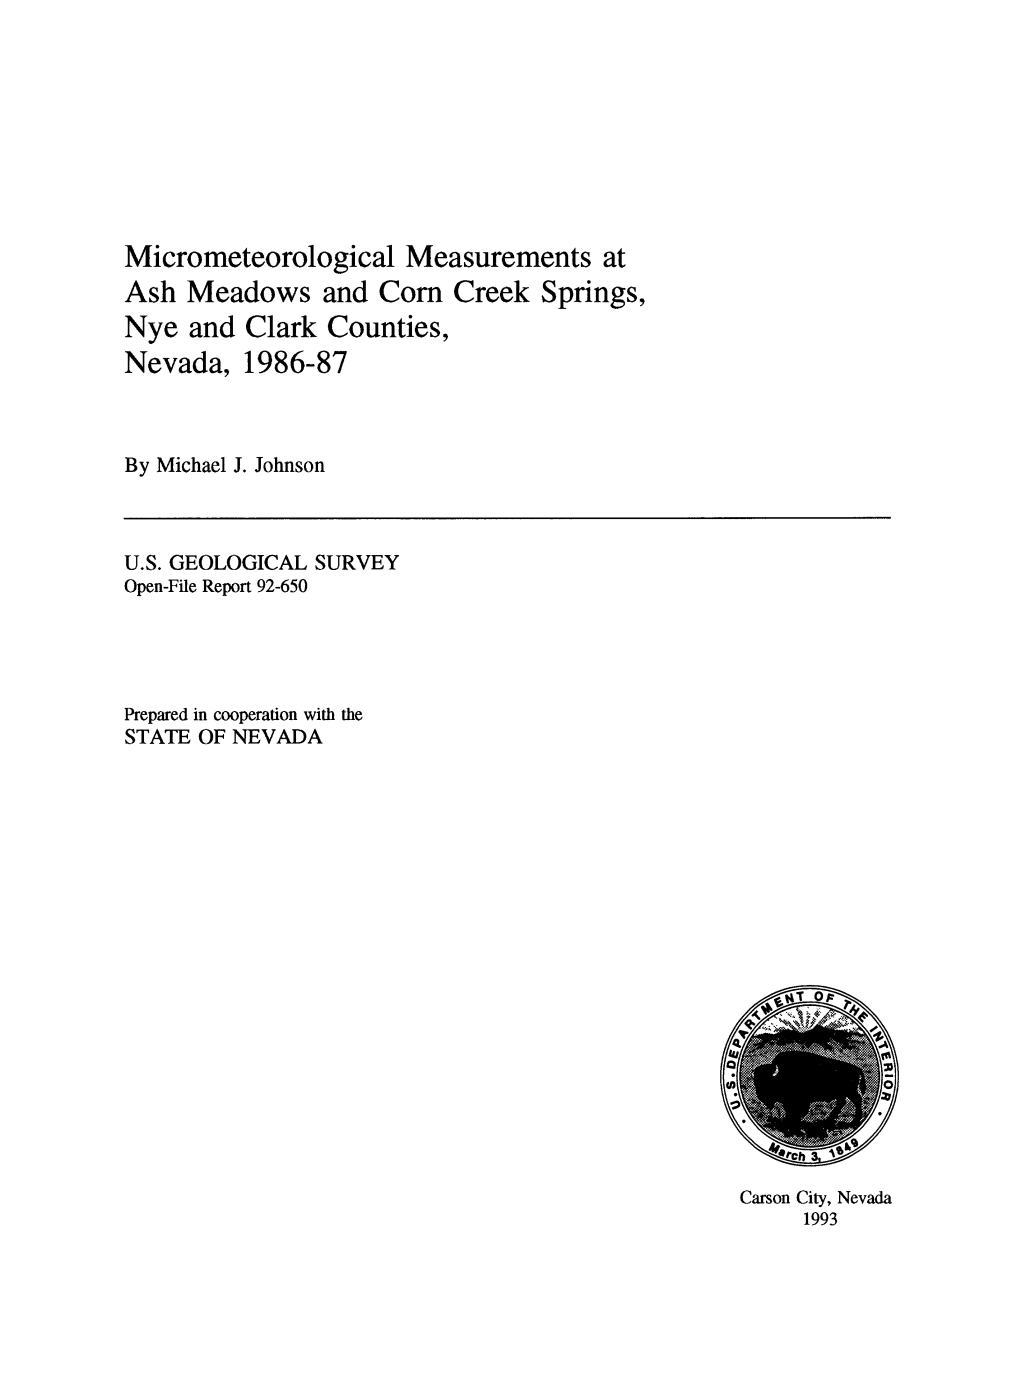 Micrometeorological Measurements at Ash Meadows and Corn Creek Springs, Nye and Clark Counties, Nevada, 1986-87